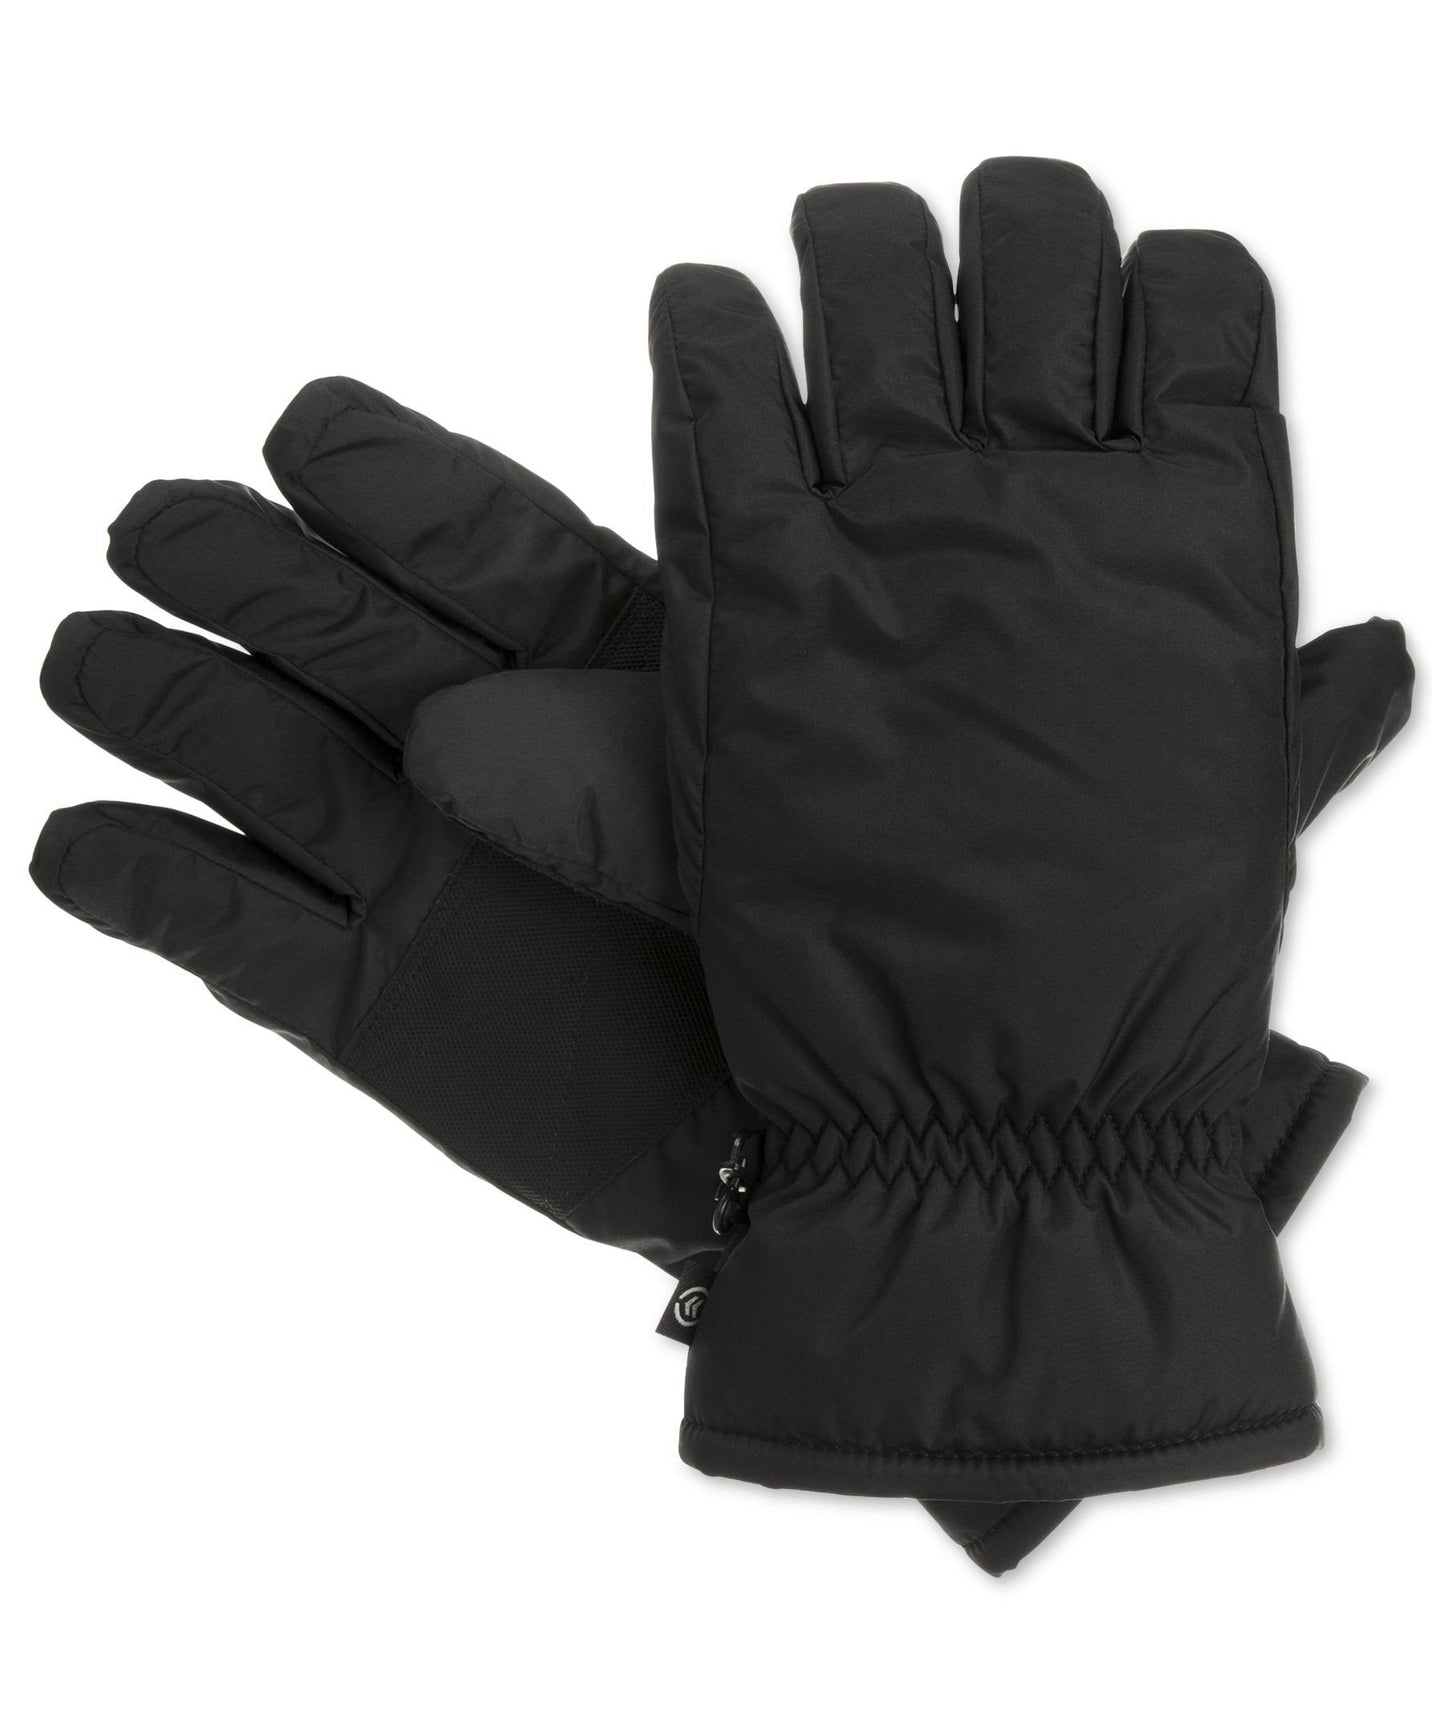 Isotoner Signature Black ULTRADRY Waterproof Ski Glove - Medium